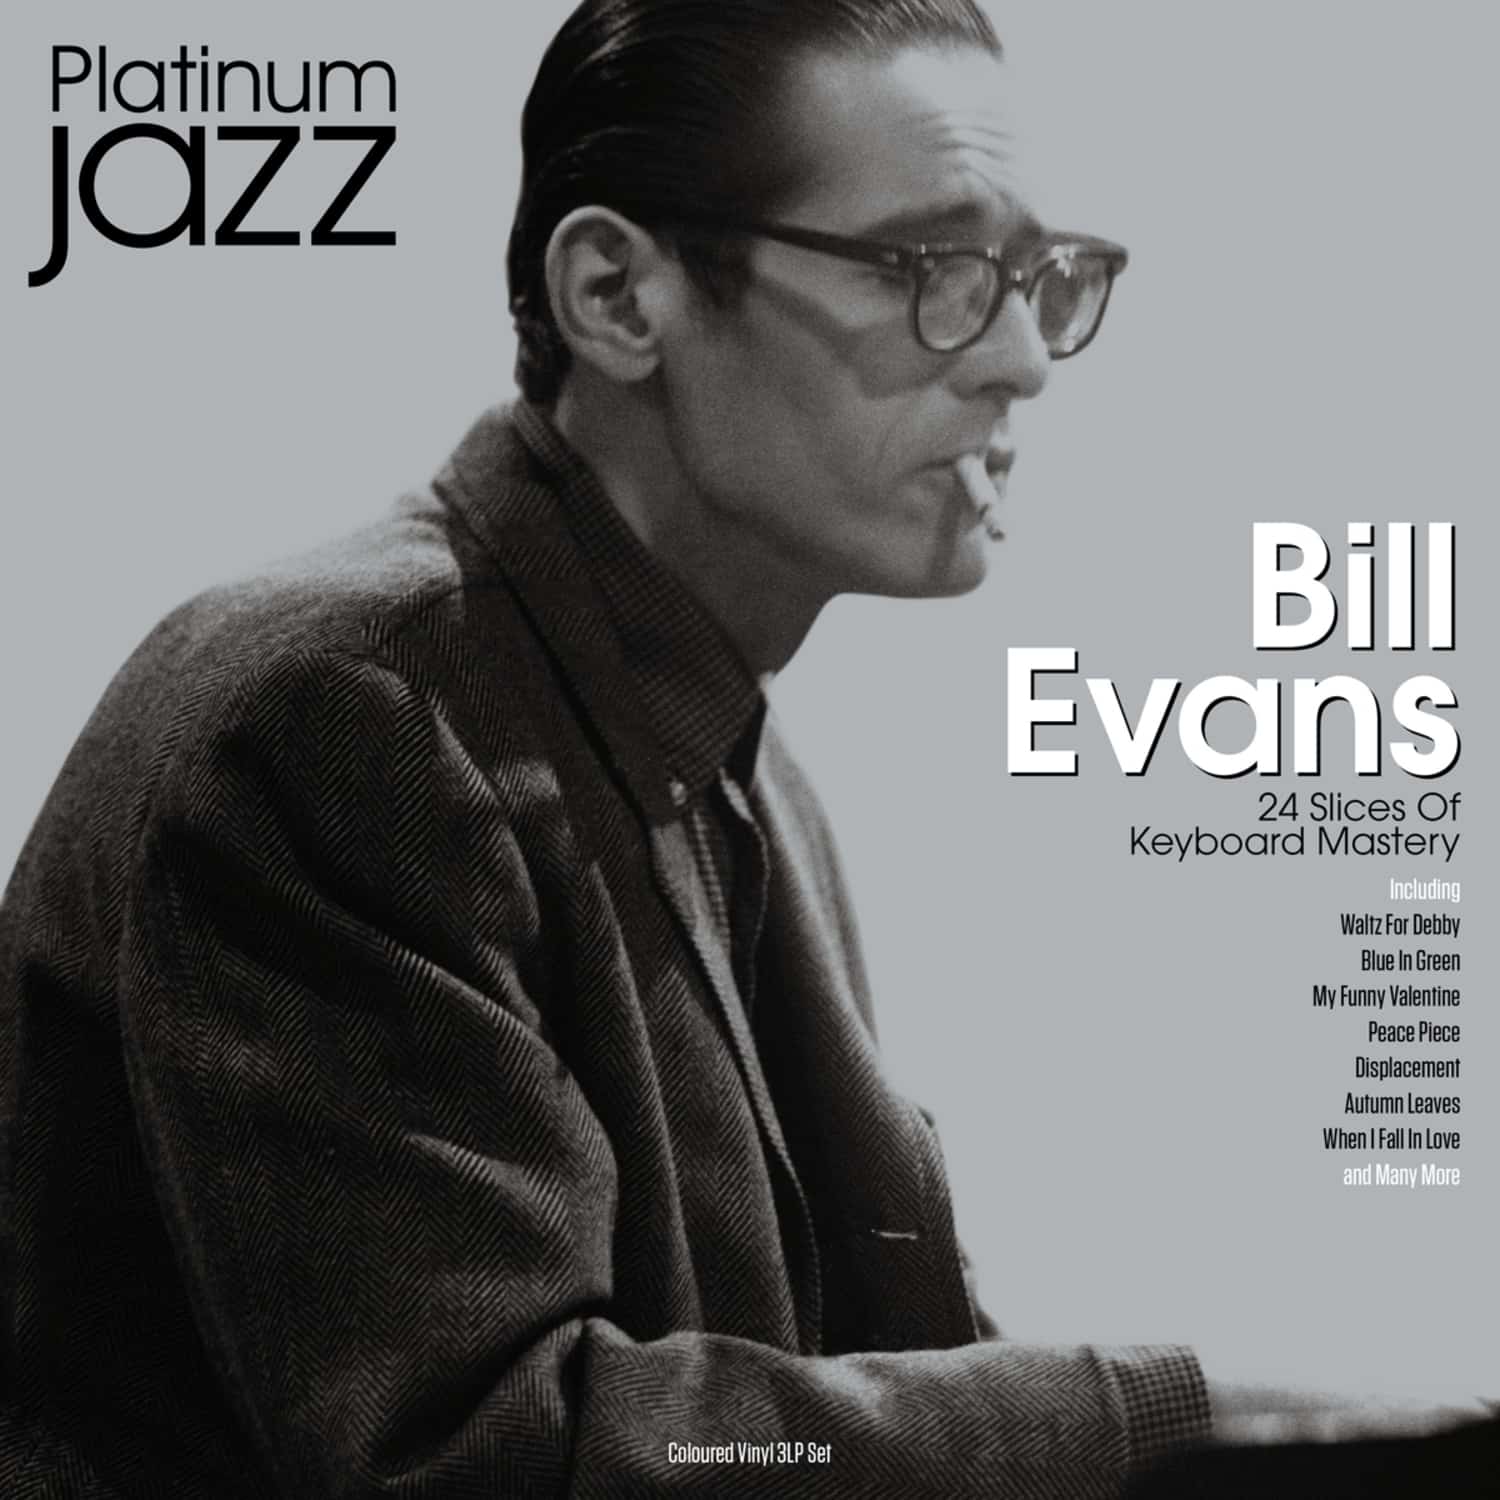  Bill Evans - PLATINUM JAZZ 